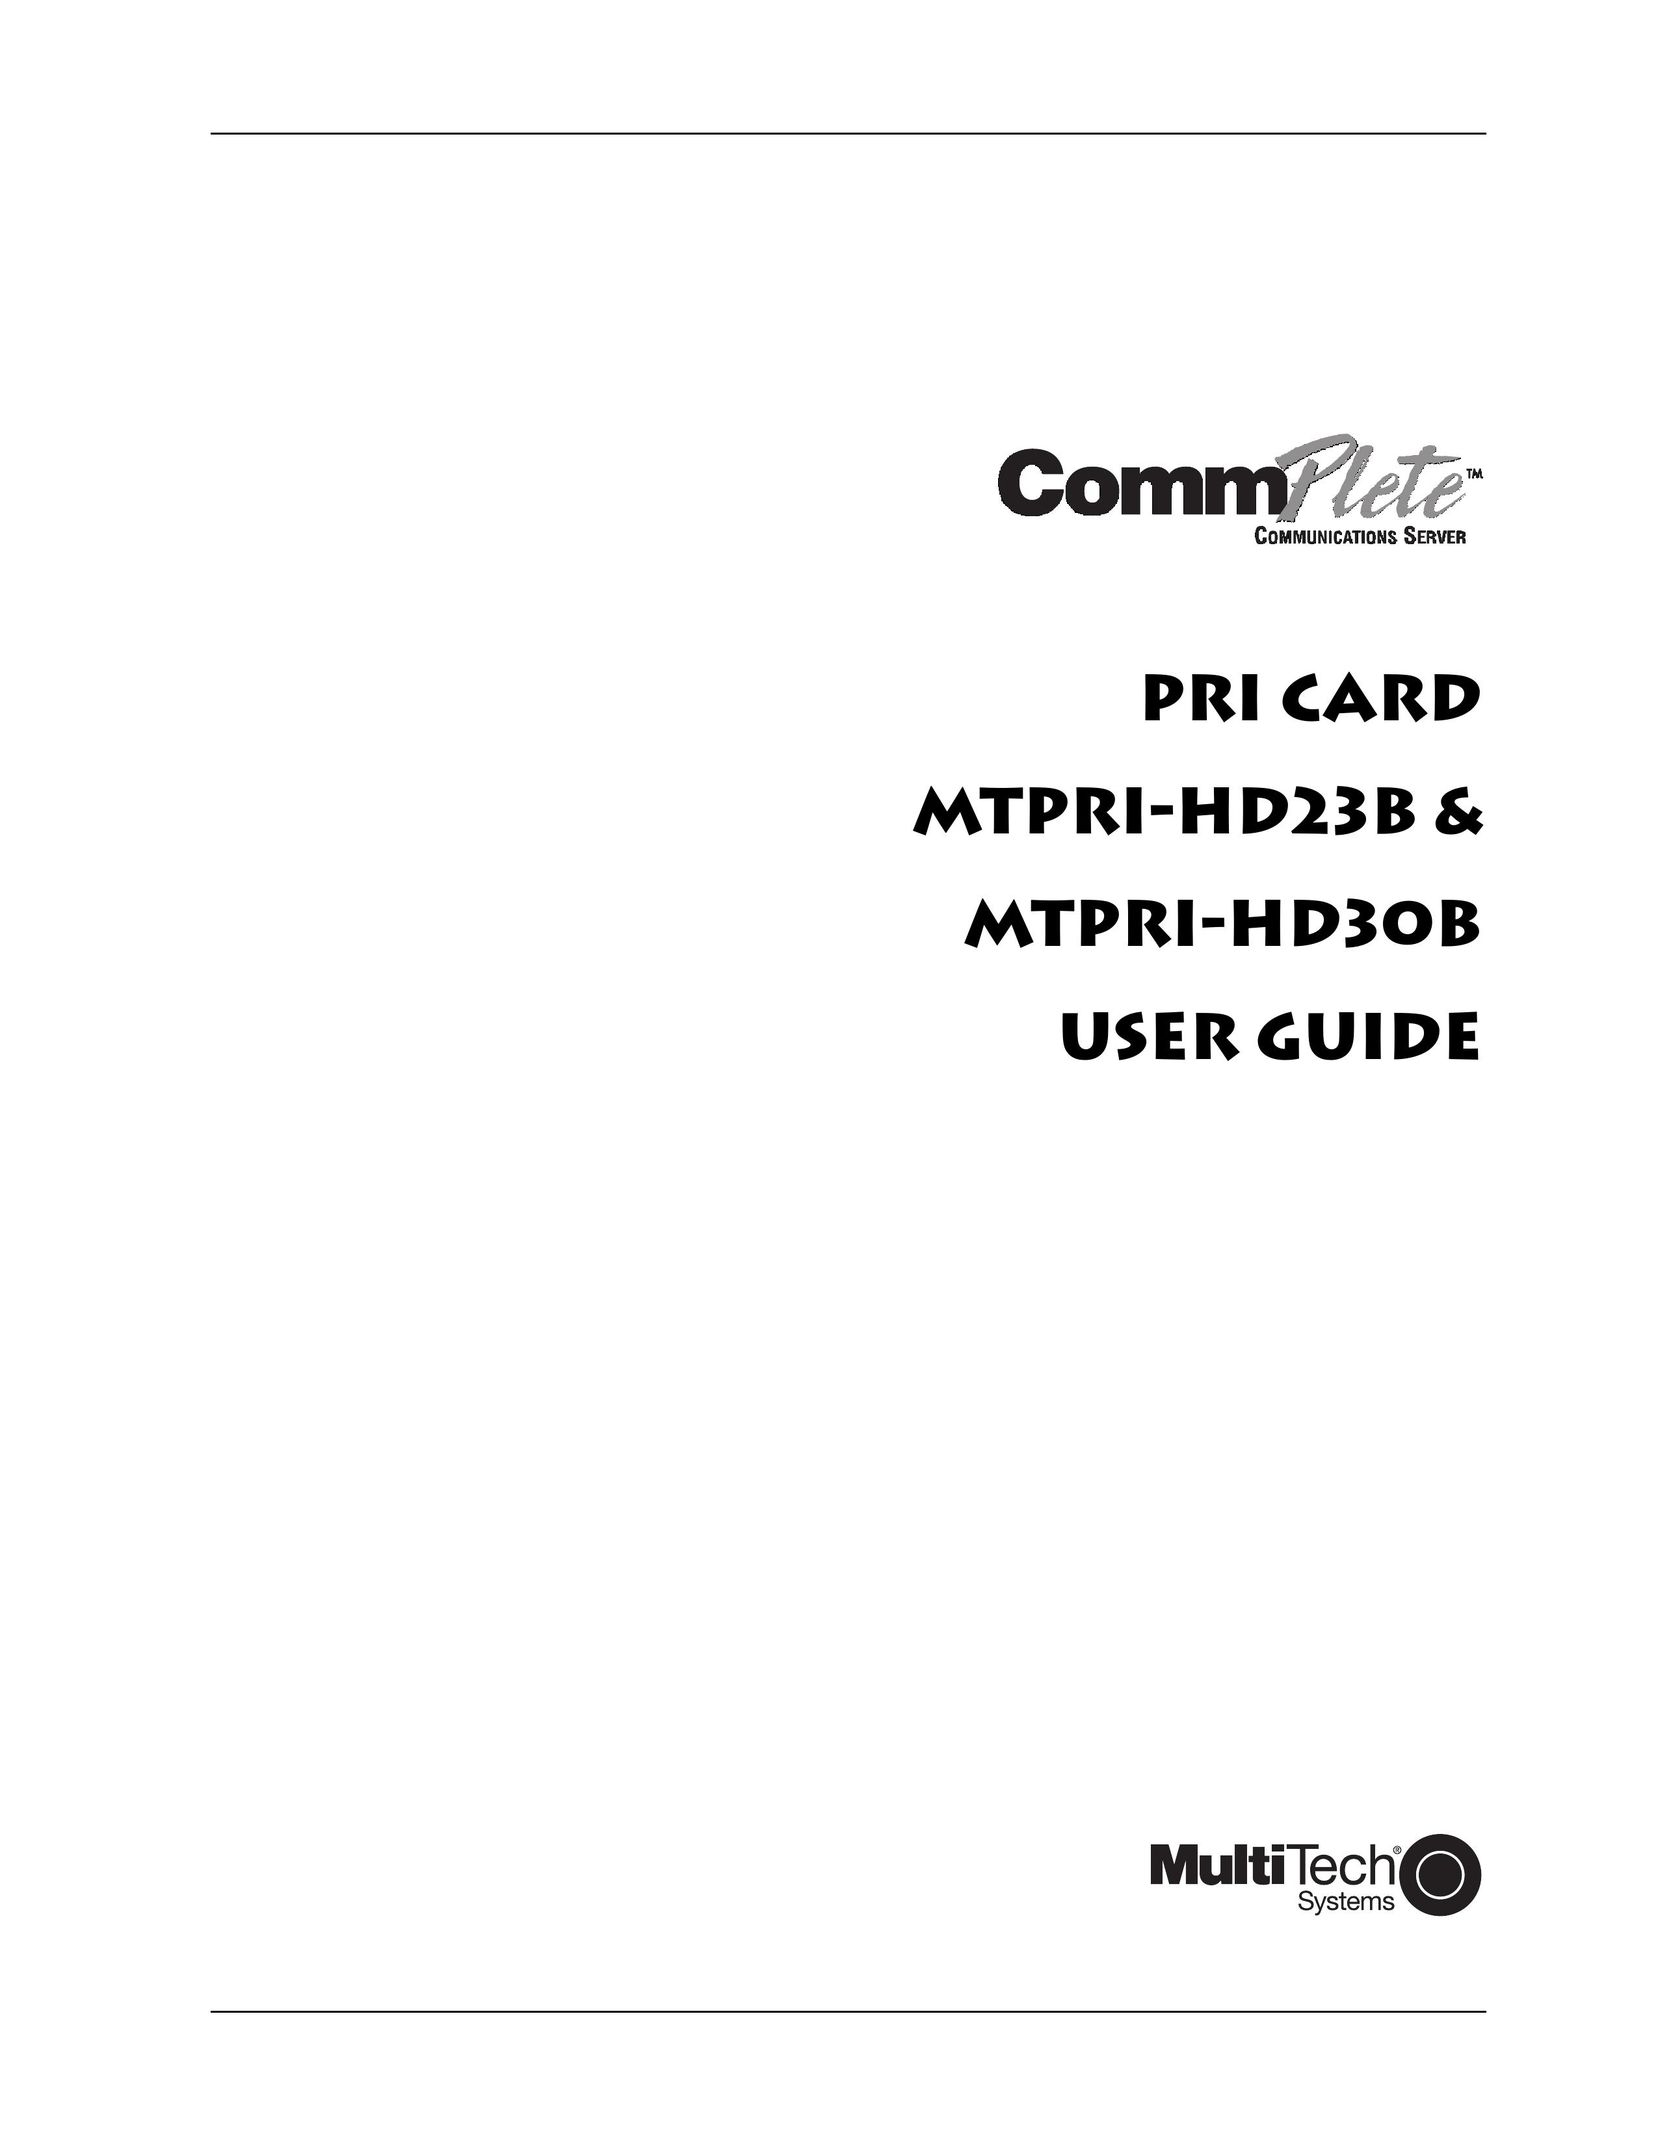 Multitech MTPRI-HD30B Network Card User Manual